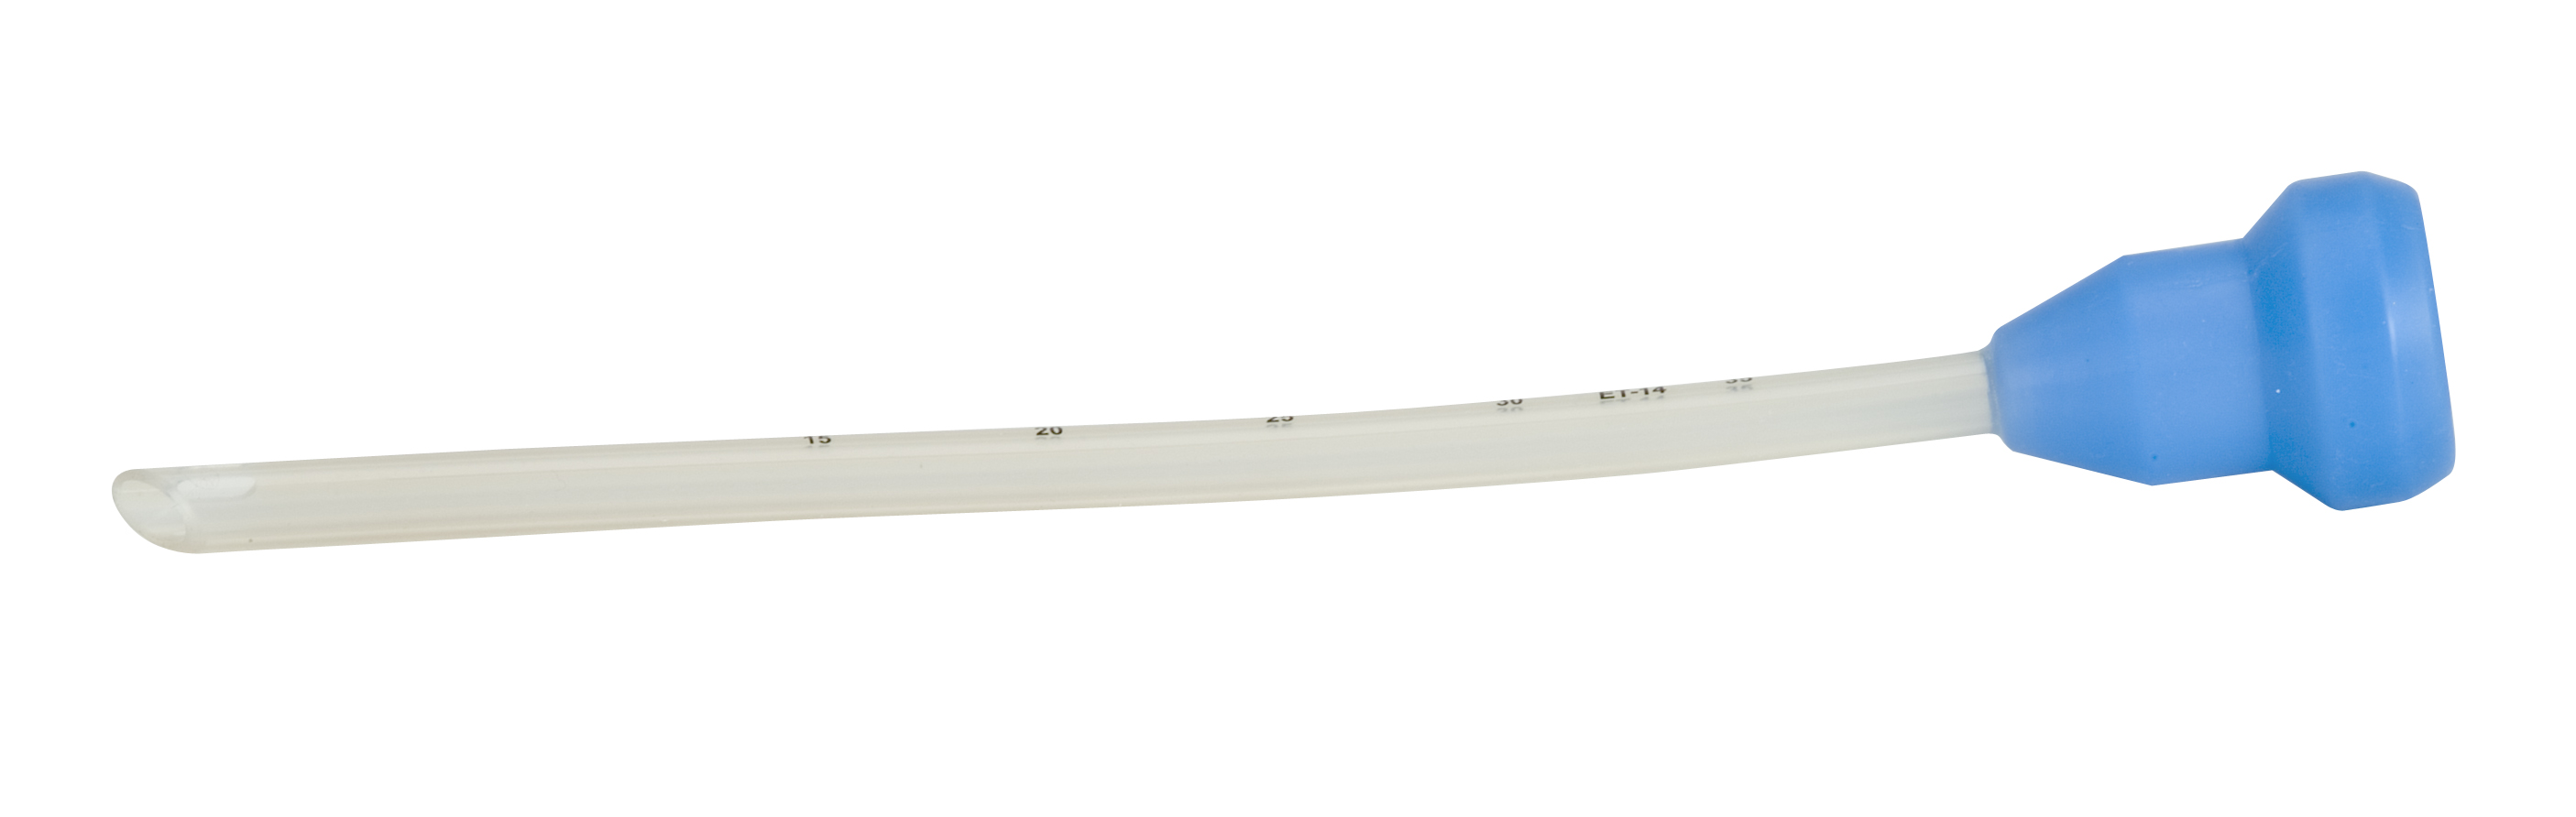 KRUUSE Endotracheal Catheter, silicone, w/cuff, L connector, ID 30.0 mm, OD 42.0 mm, 126 Fr x 100 cm (39.4'')